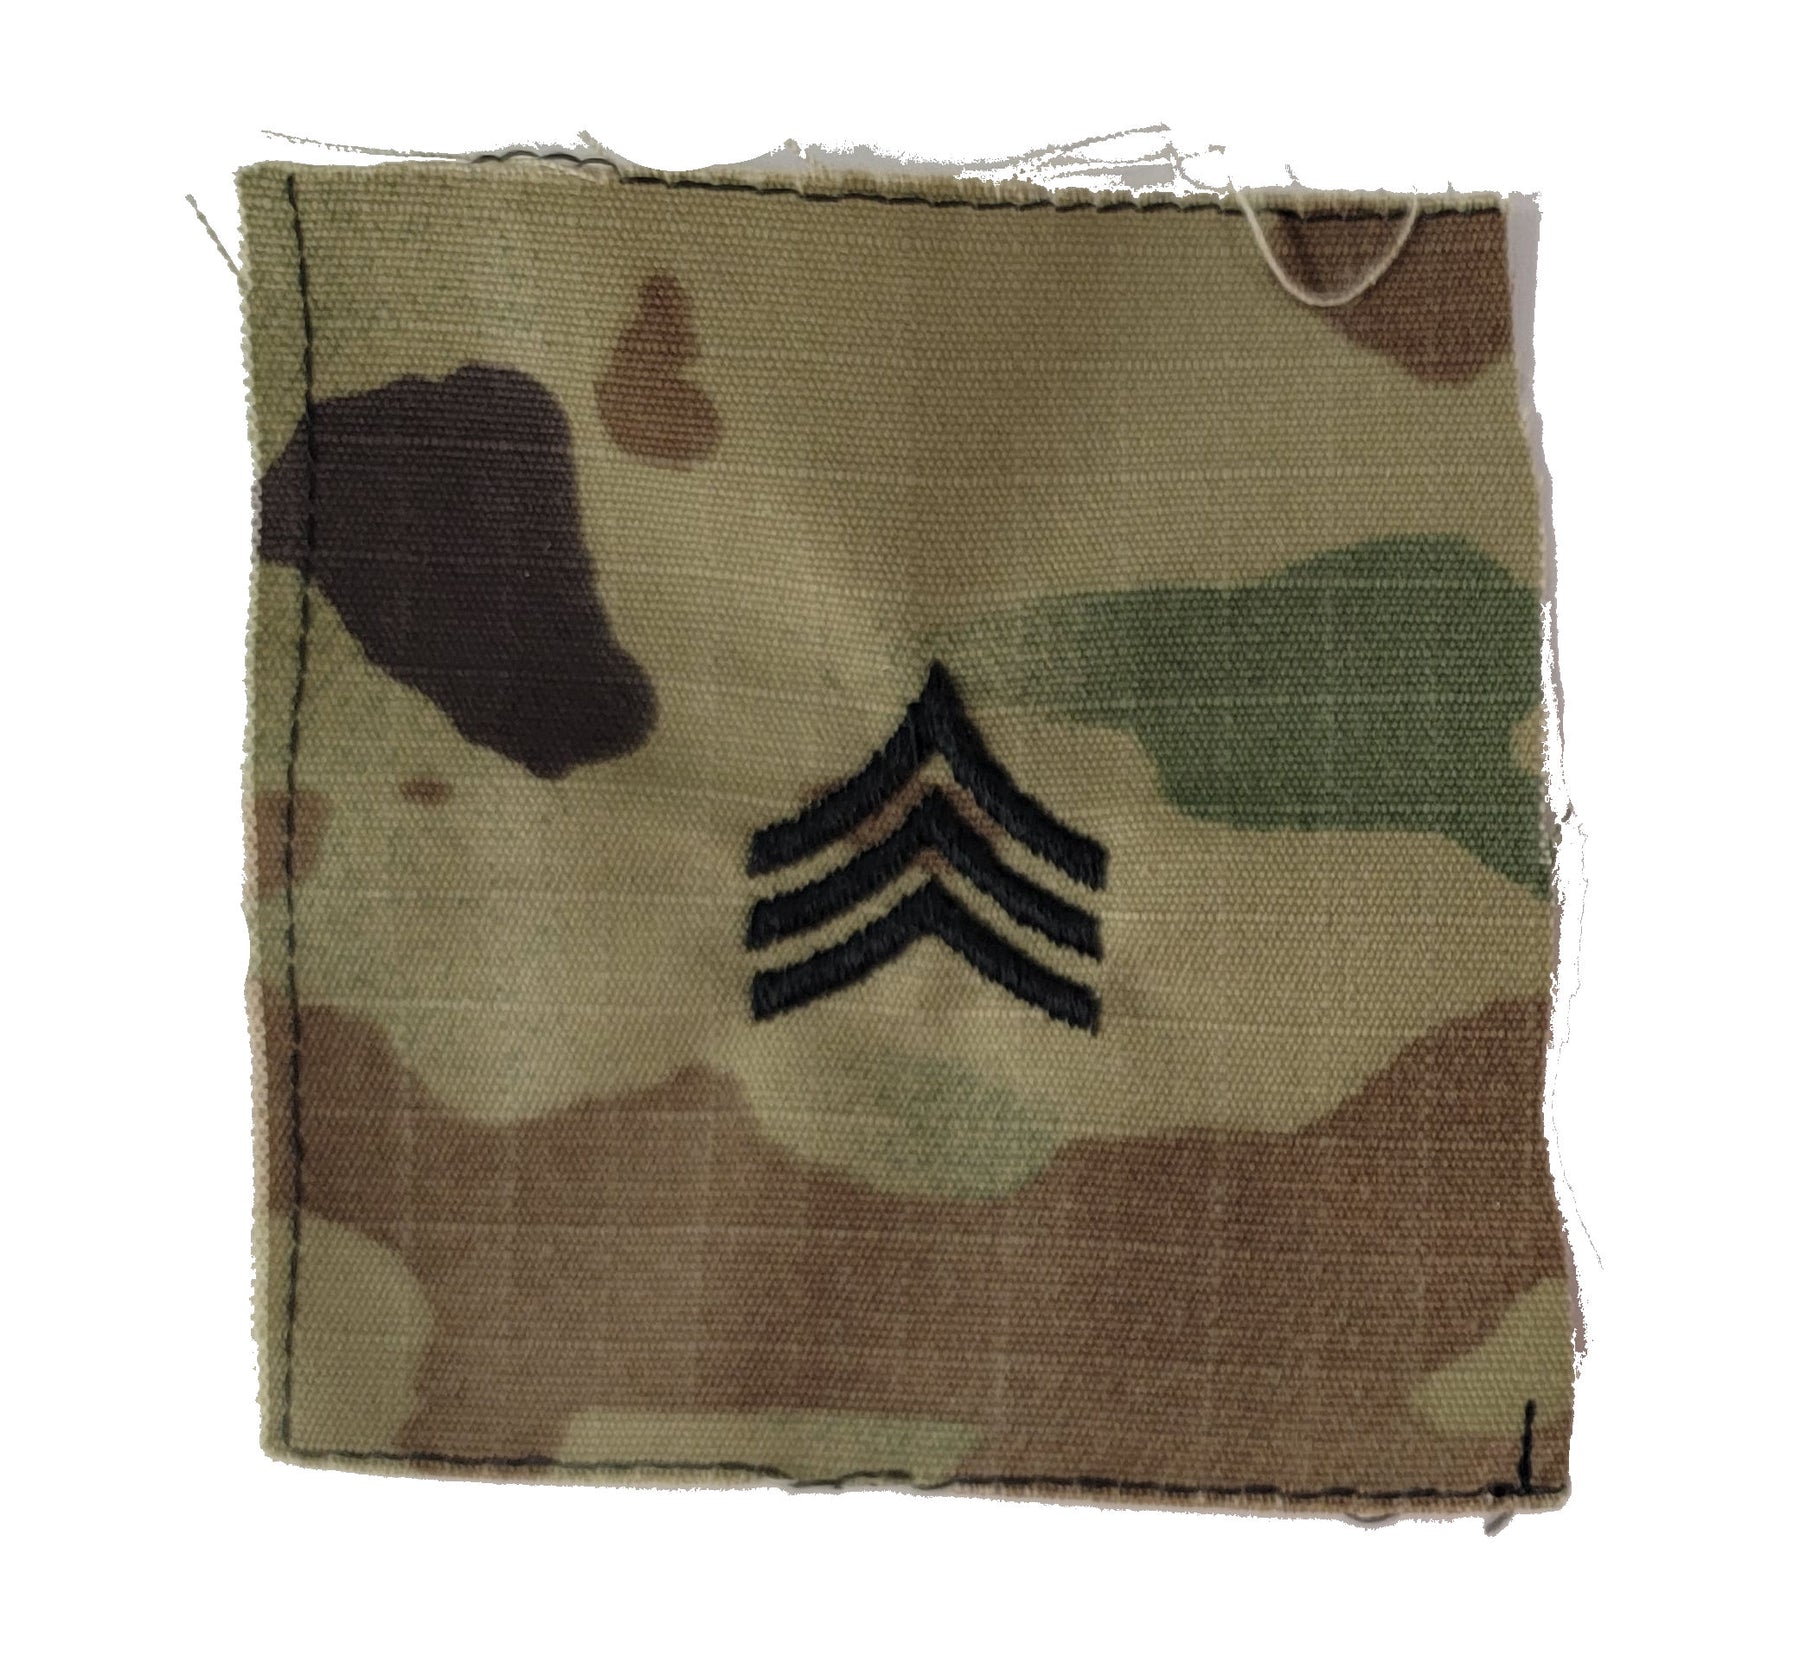 Sew-On U.S. Army OCP Rank Insignia - CHEST - 2x2